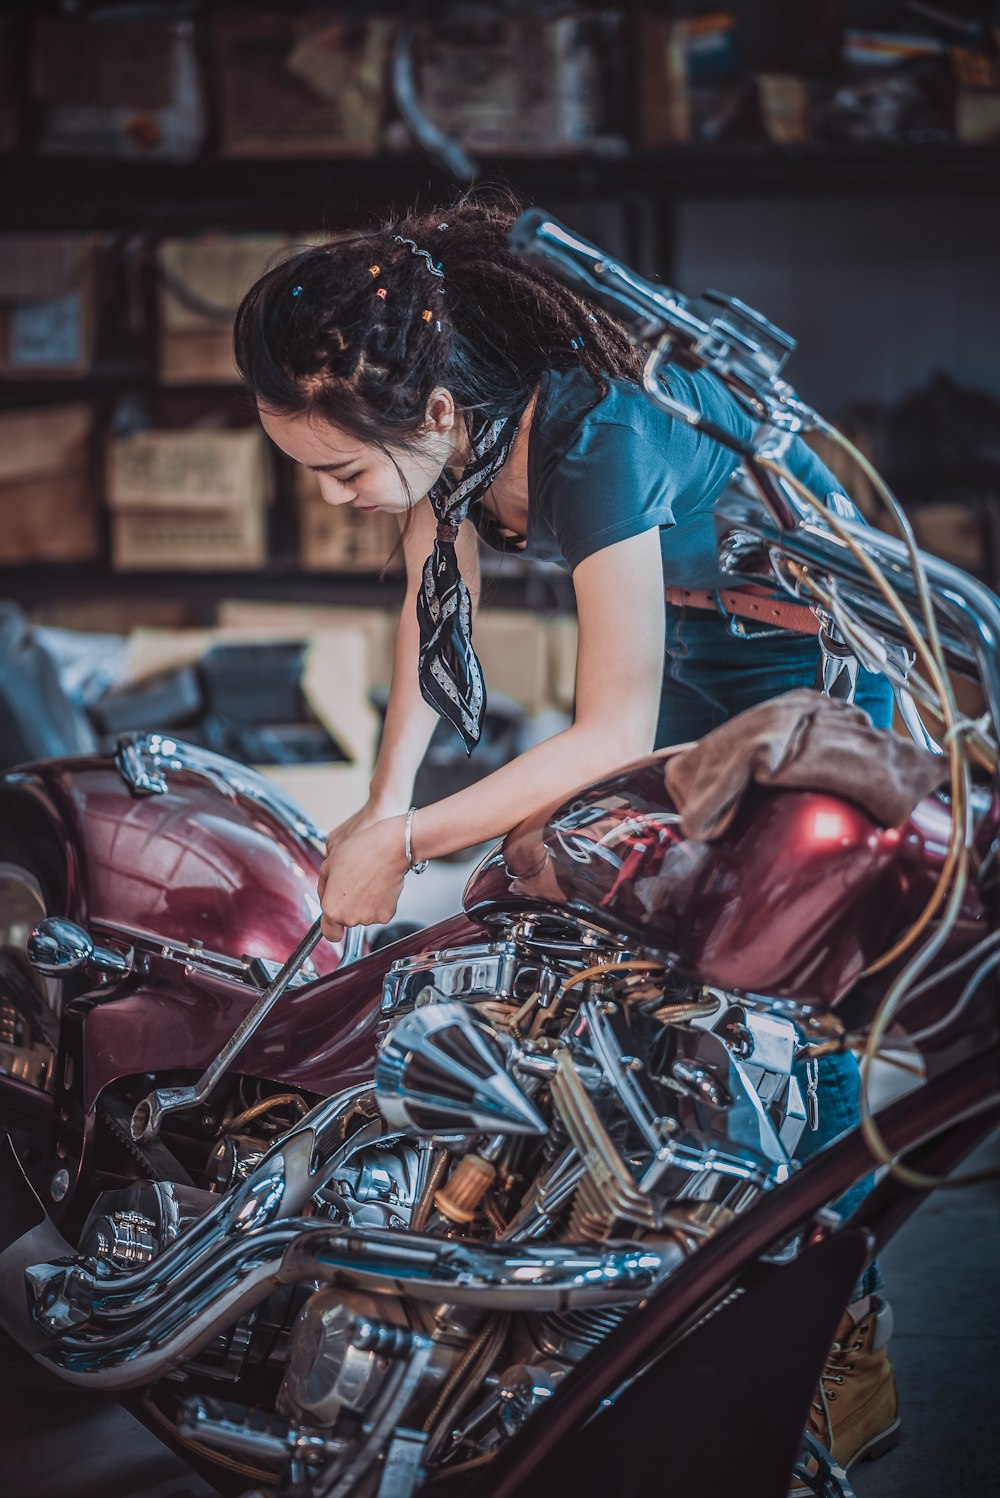 photo of woman repairing motorcycle